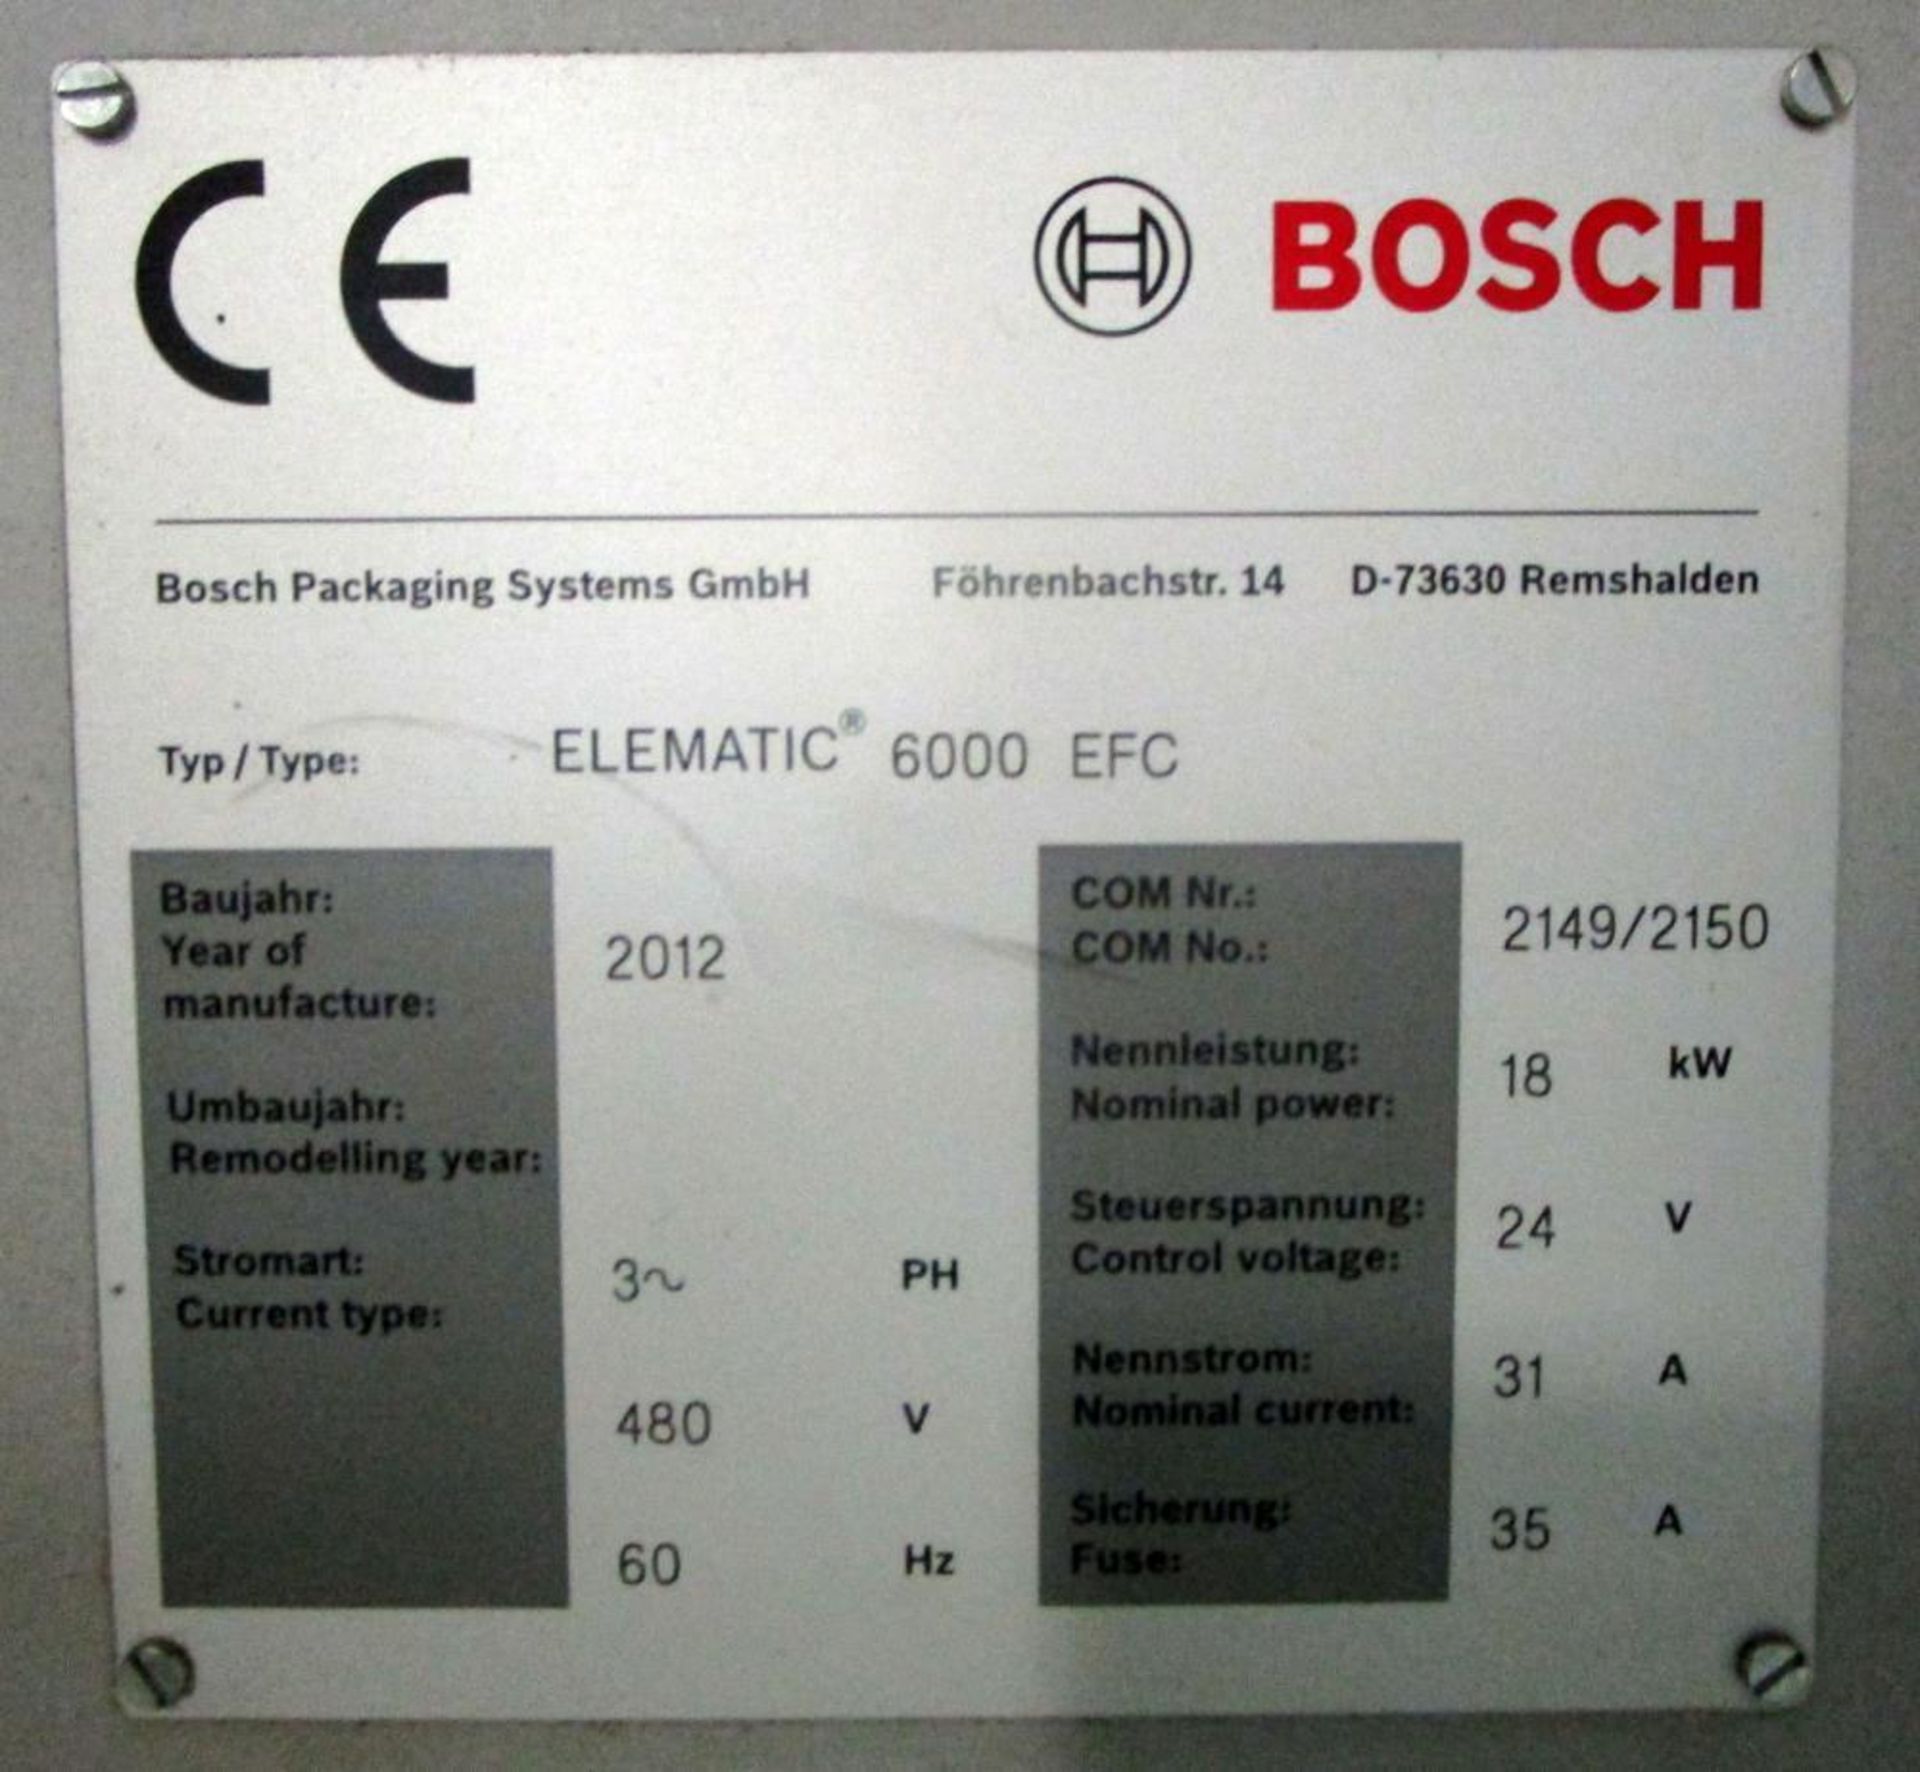 Bosch Triseal Carton Closer Model Elematic 6000 EFC - Image 7 of 27